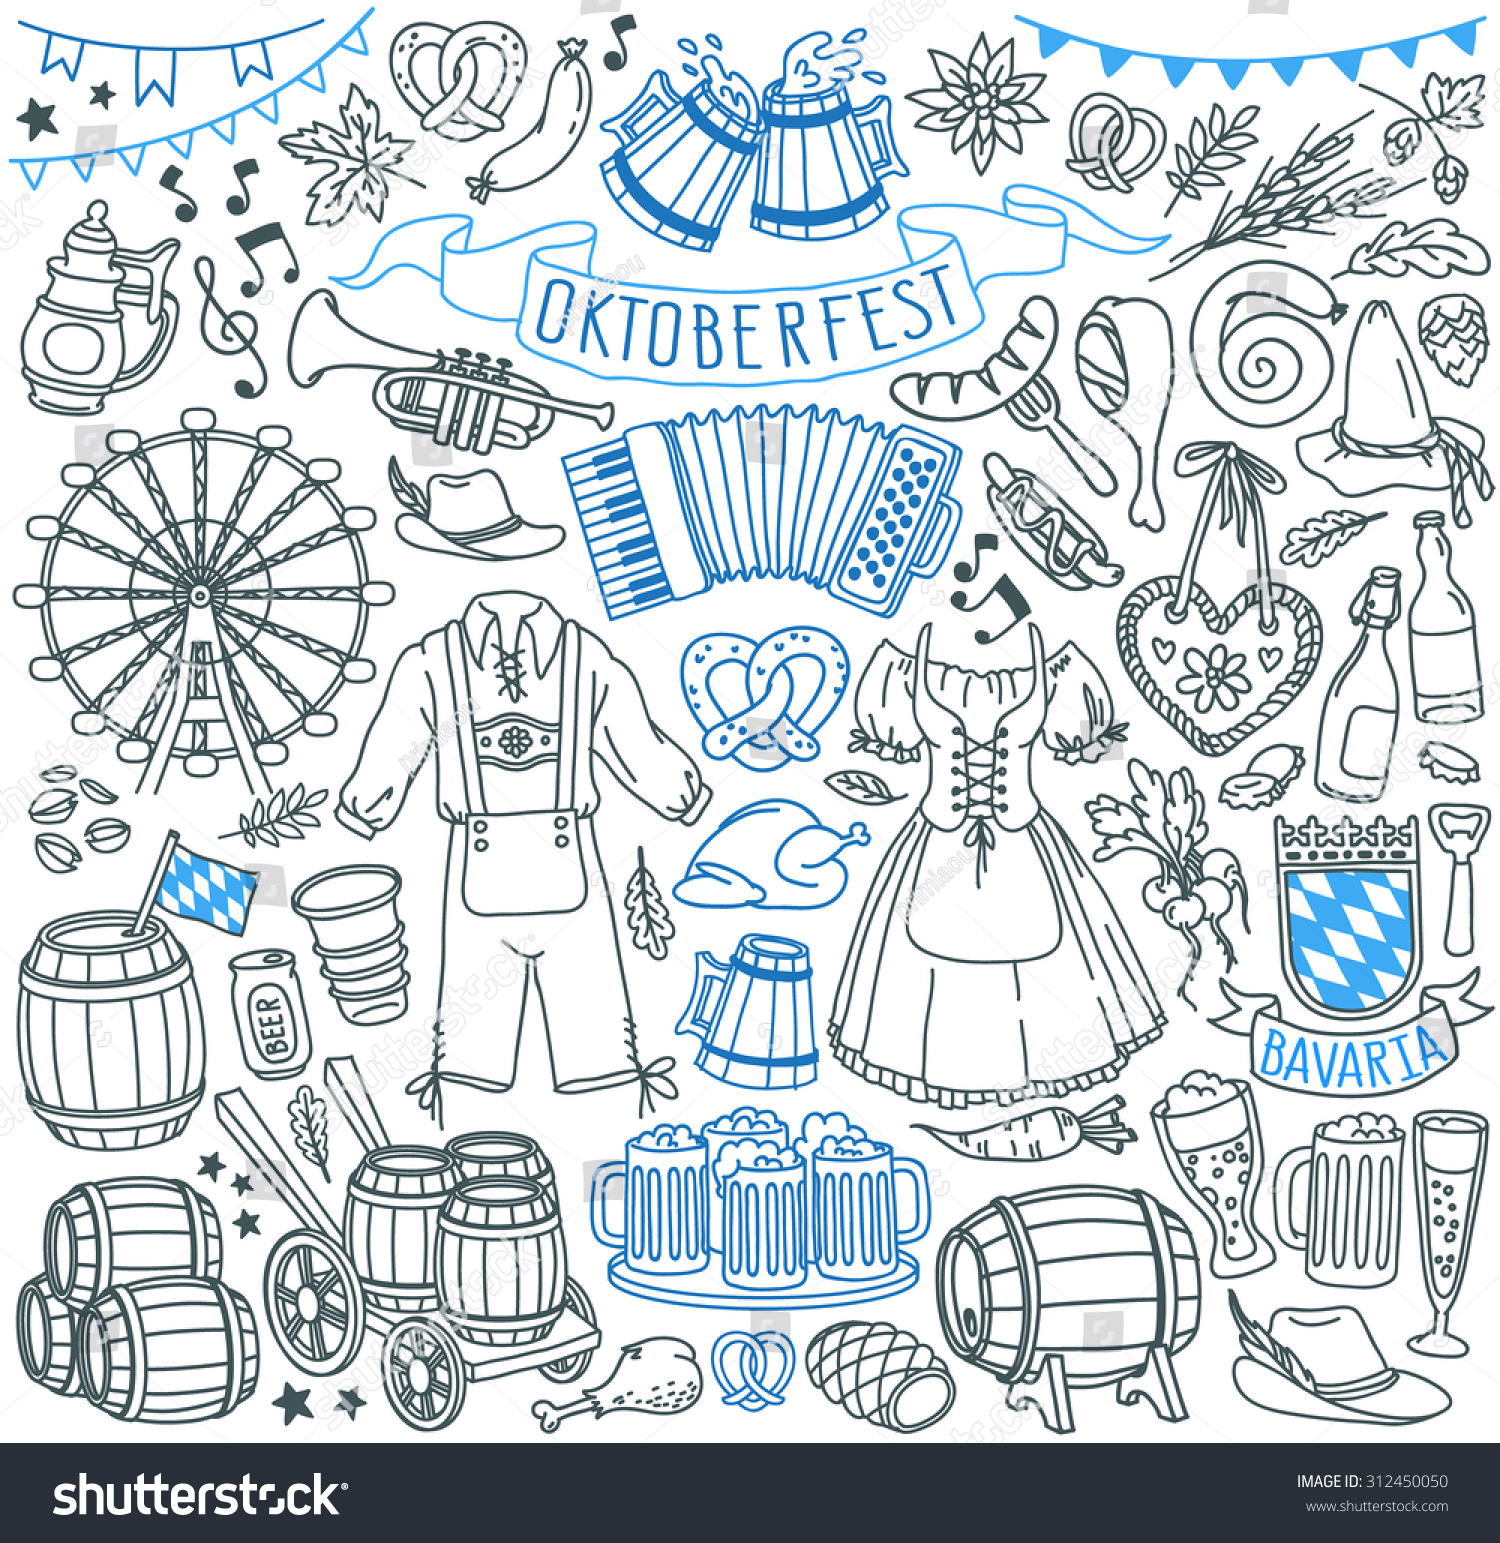 Oktoberfest Themed Doodle Set. Traditional Symbols Bavarian Costumes